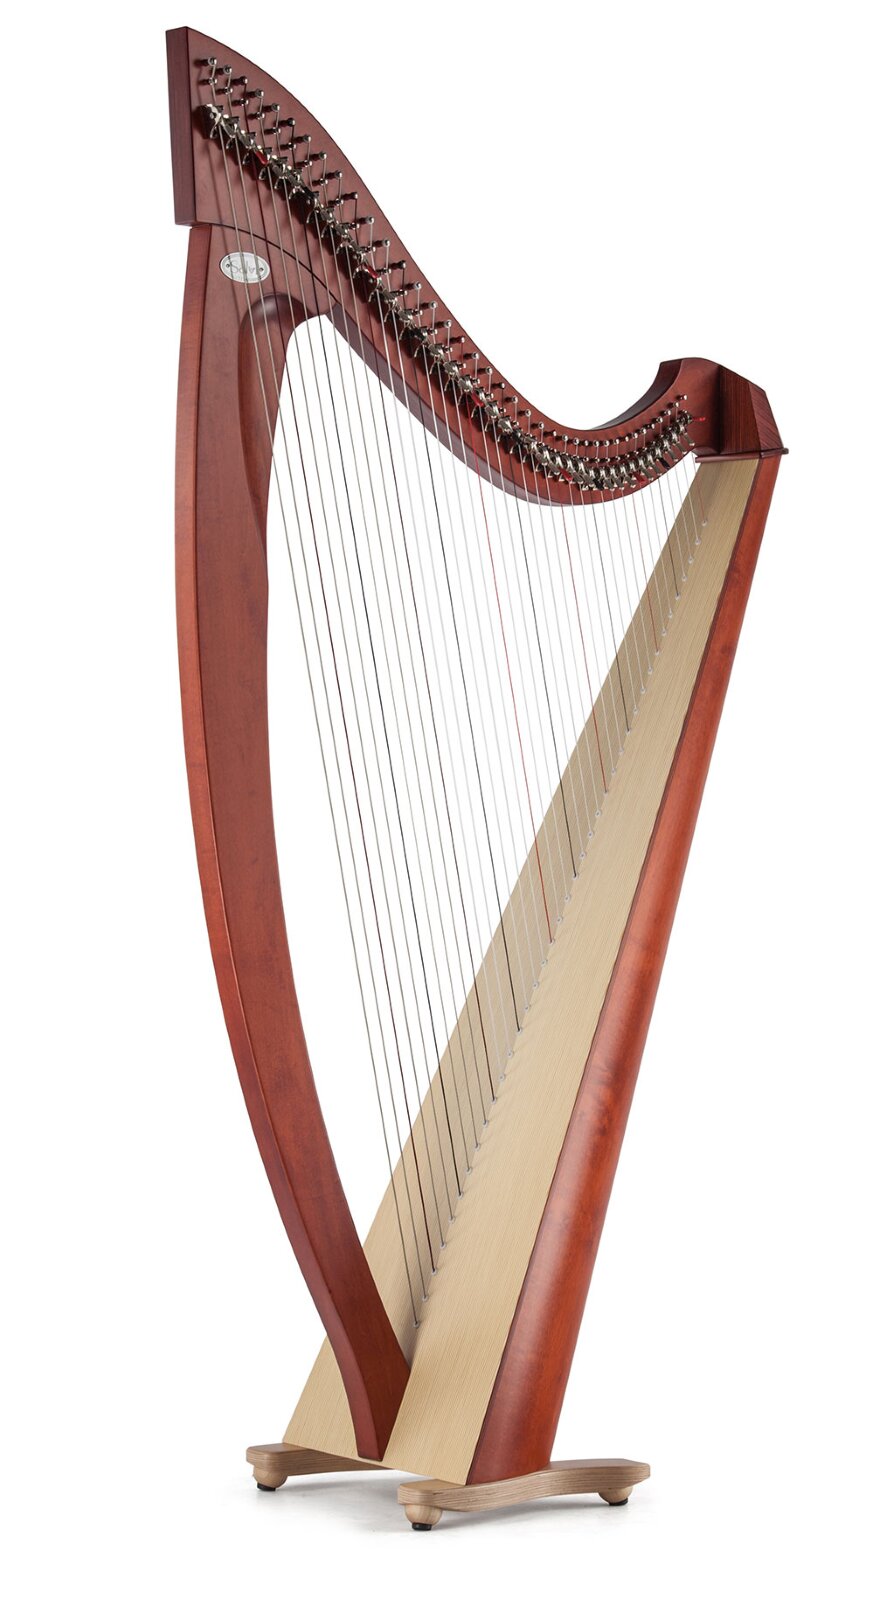 Salvi Titan 38 strings in Silkgut / Darm mahogany finish : photo 1